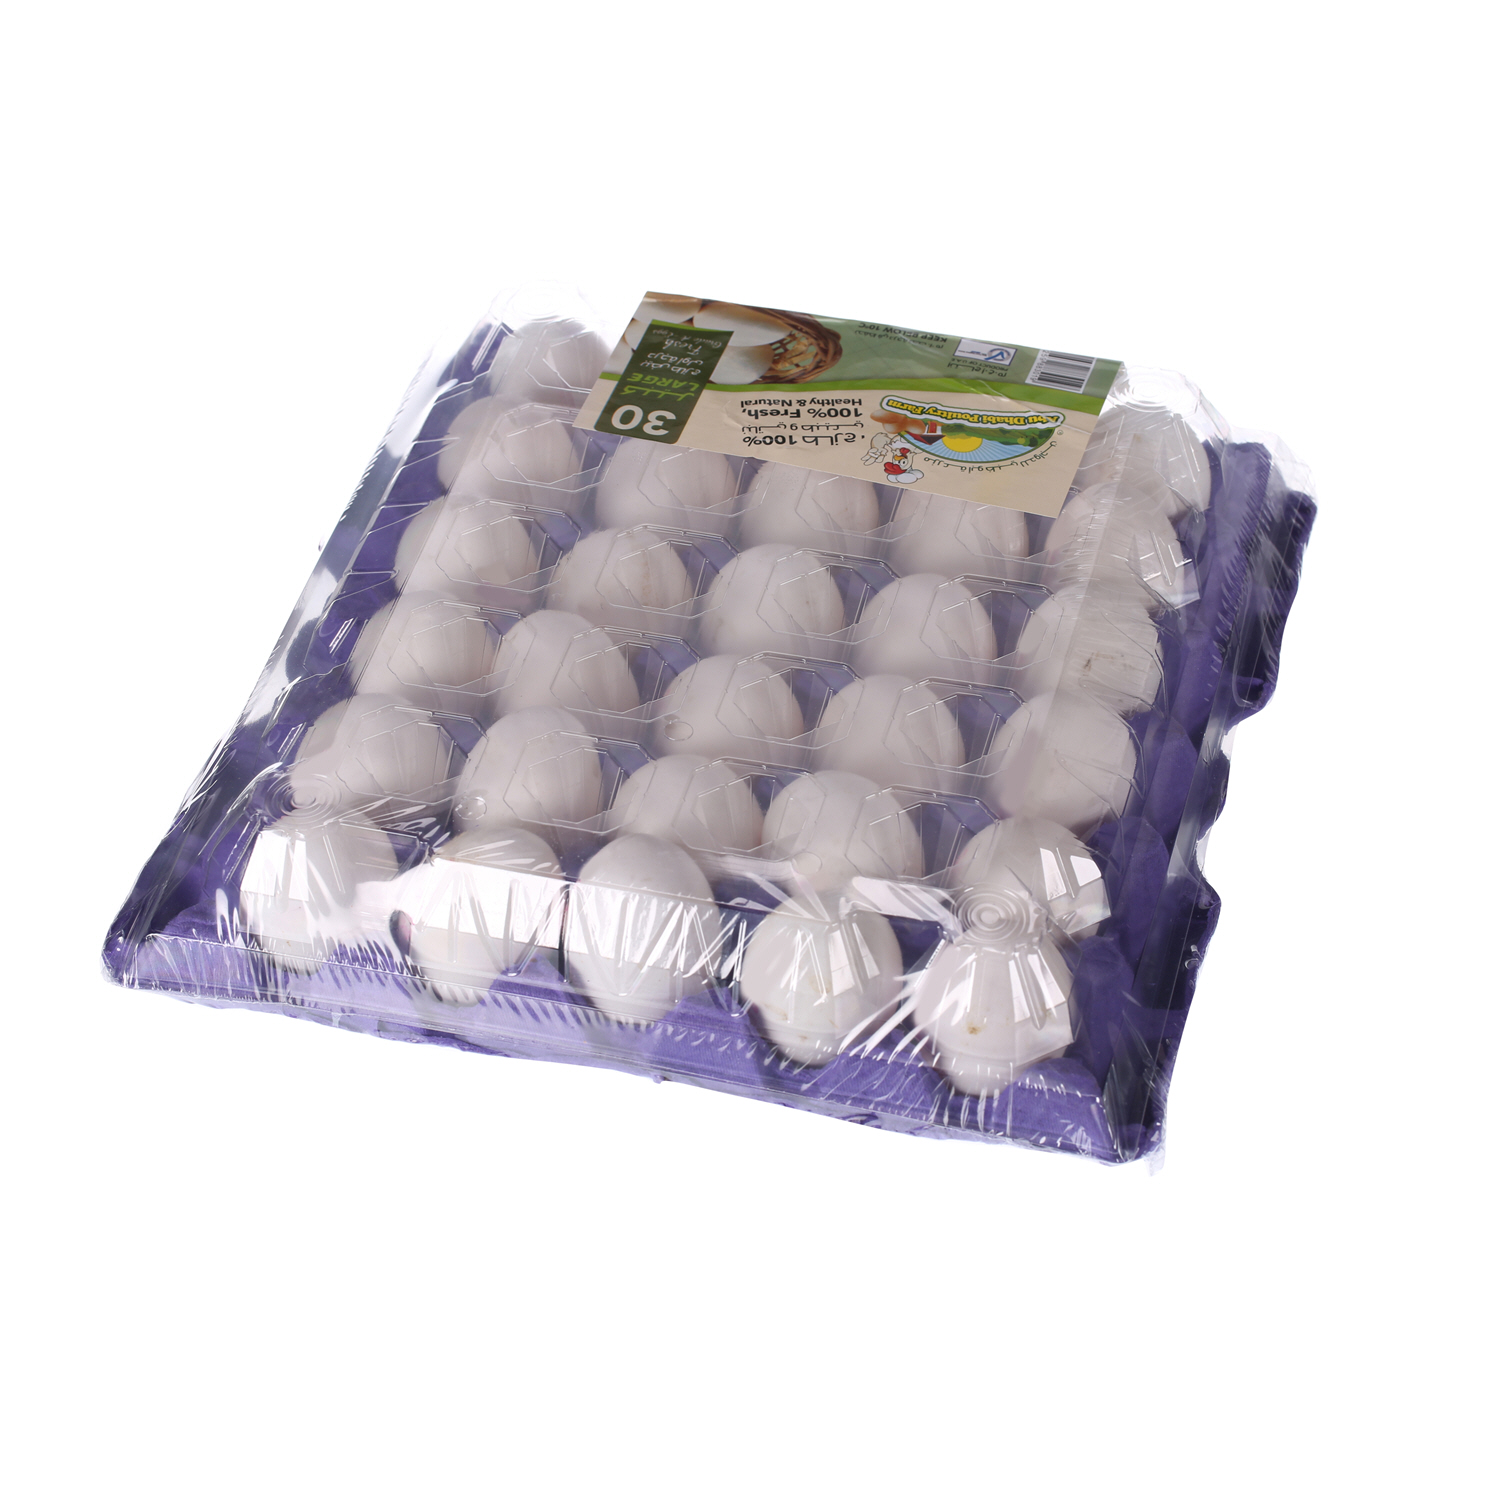 Abu Dhabi Fresh White Eggs Large 30 Pack